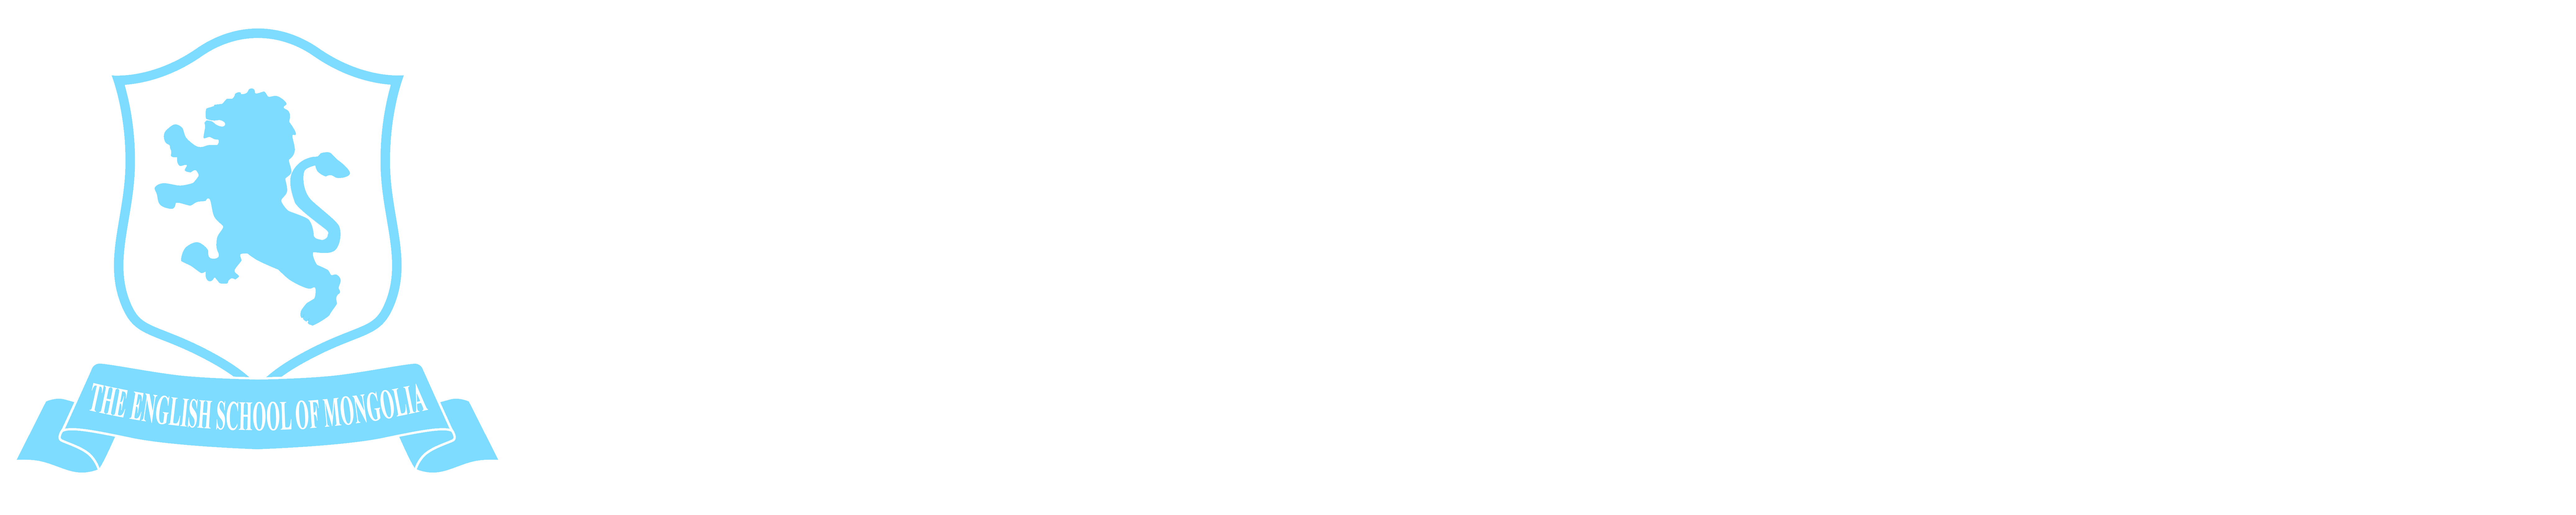 The English School of Mongolia Logo